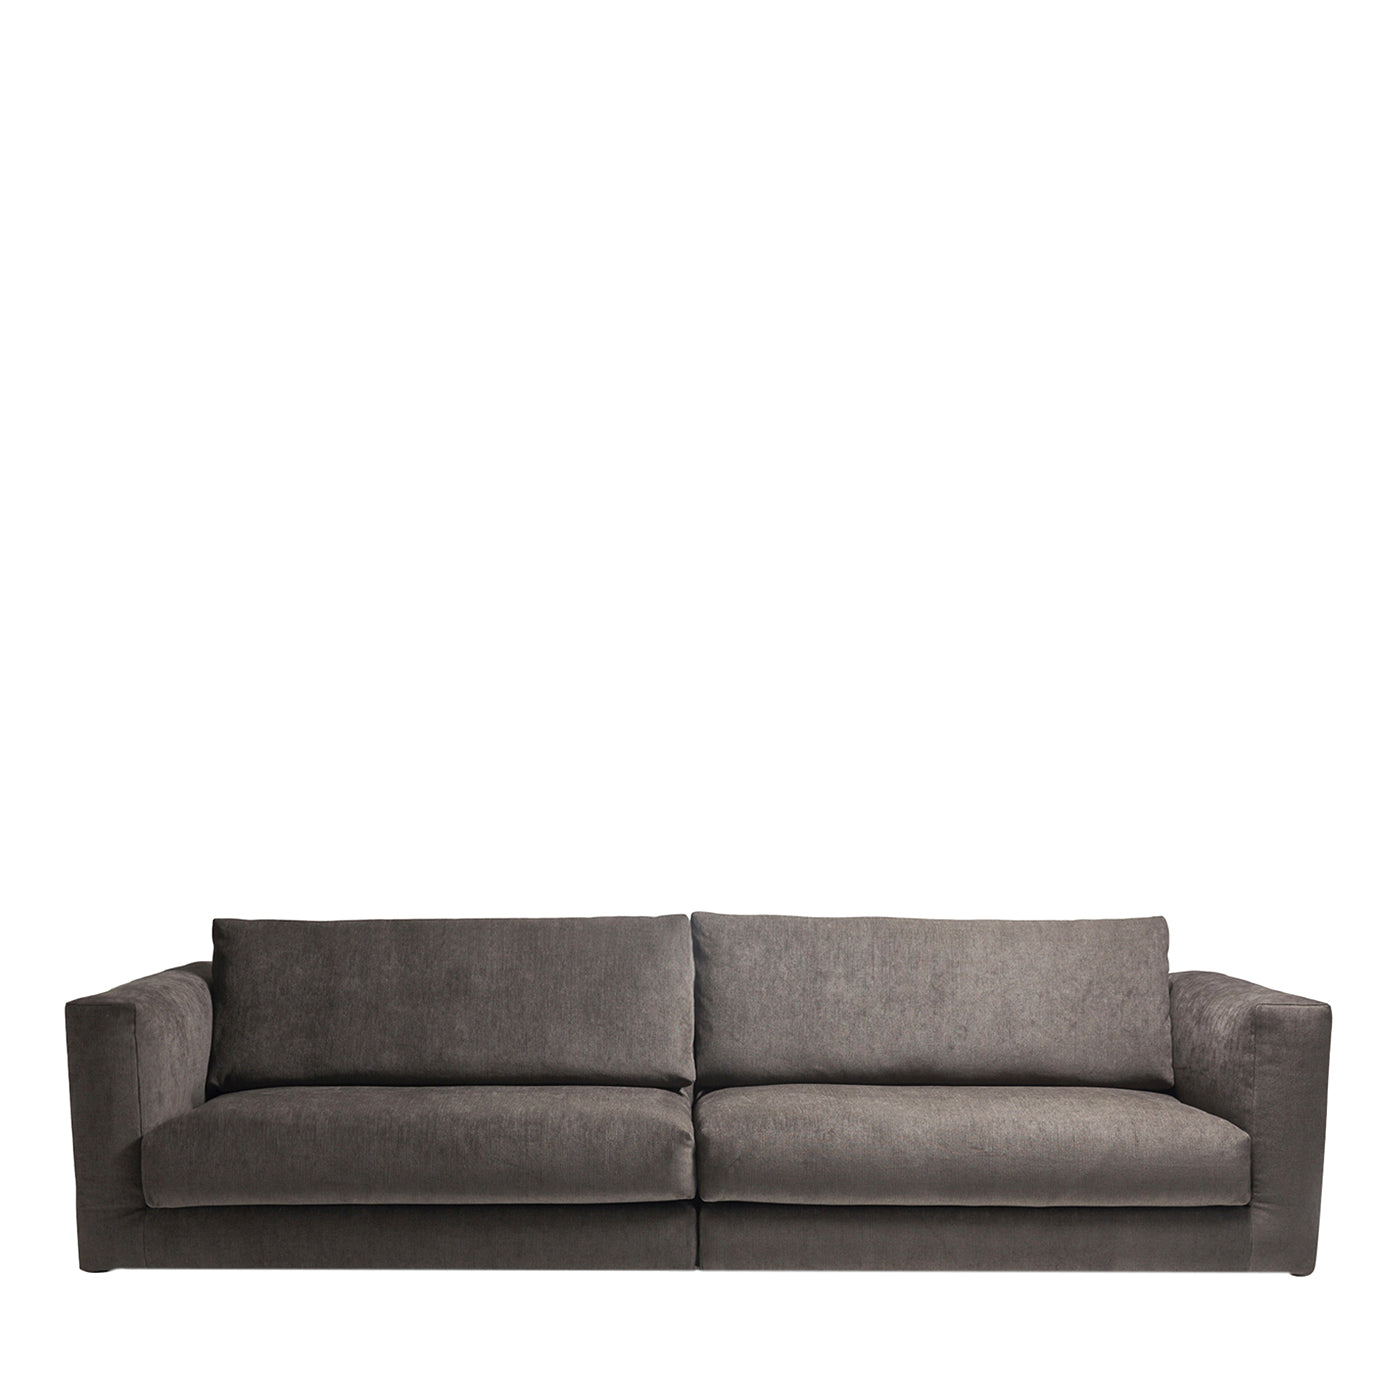 Evo 845 Large Gray Sofa by Gianluigi Landoni - Main view